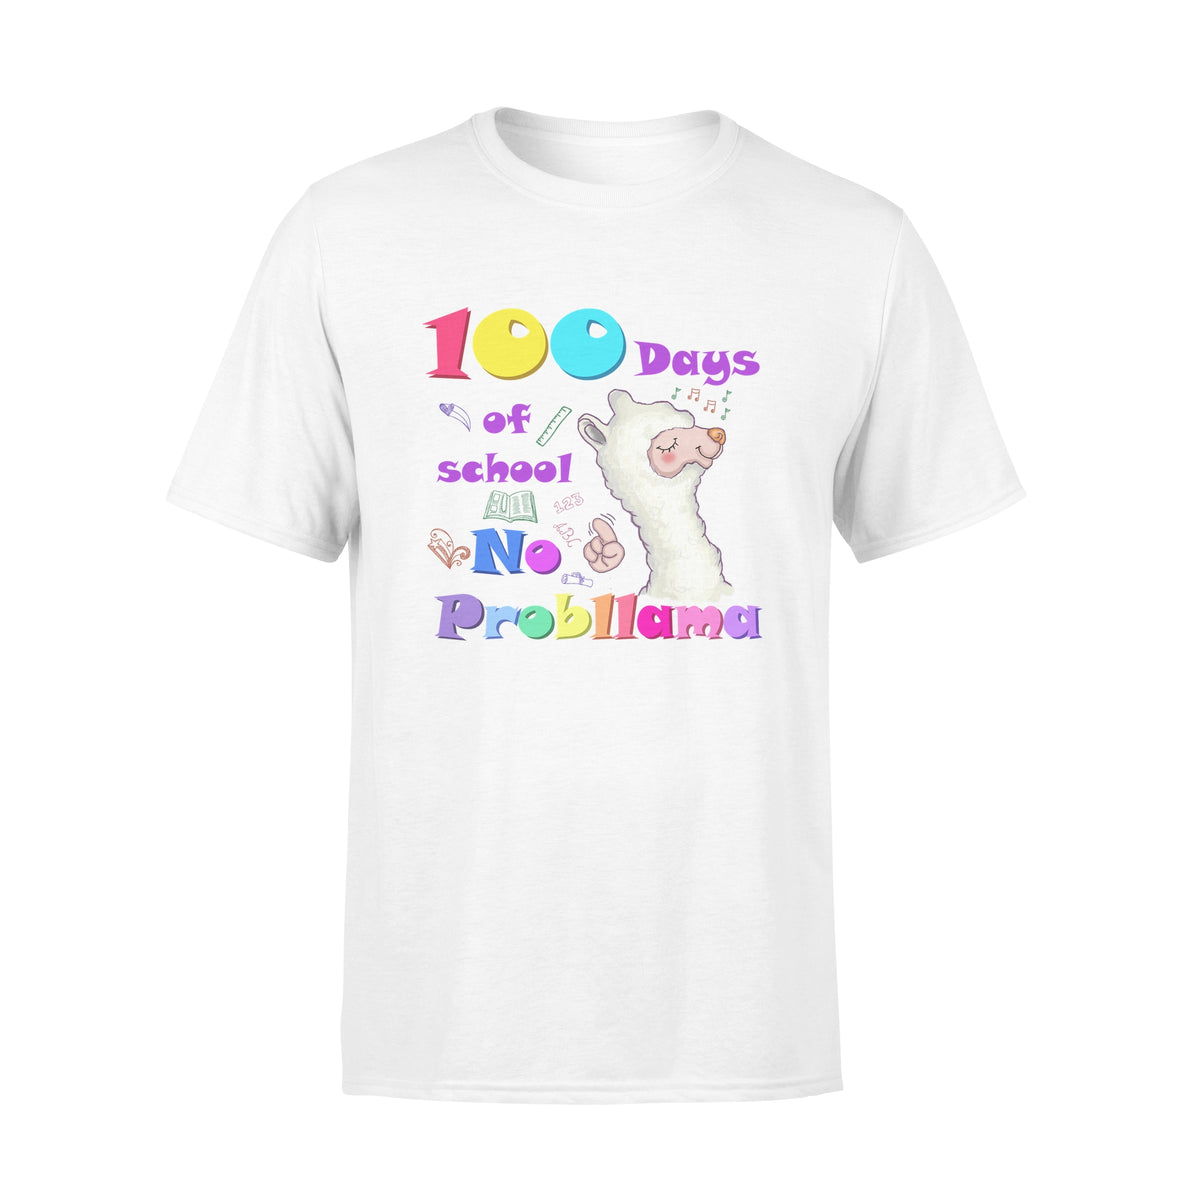 [MAN WOMAN] Happy 100 days of school premium t-shirt ideas for kid kindergarten students - 100 days of school no probllama